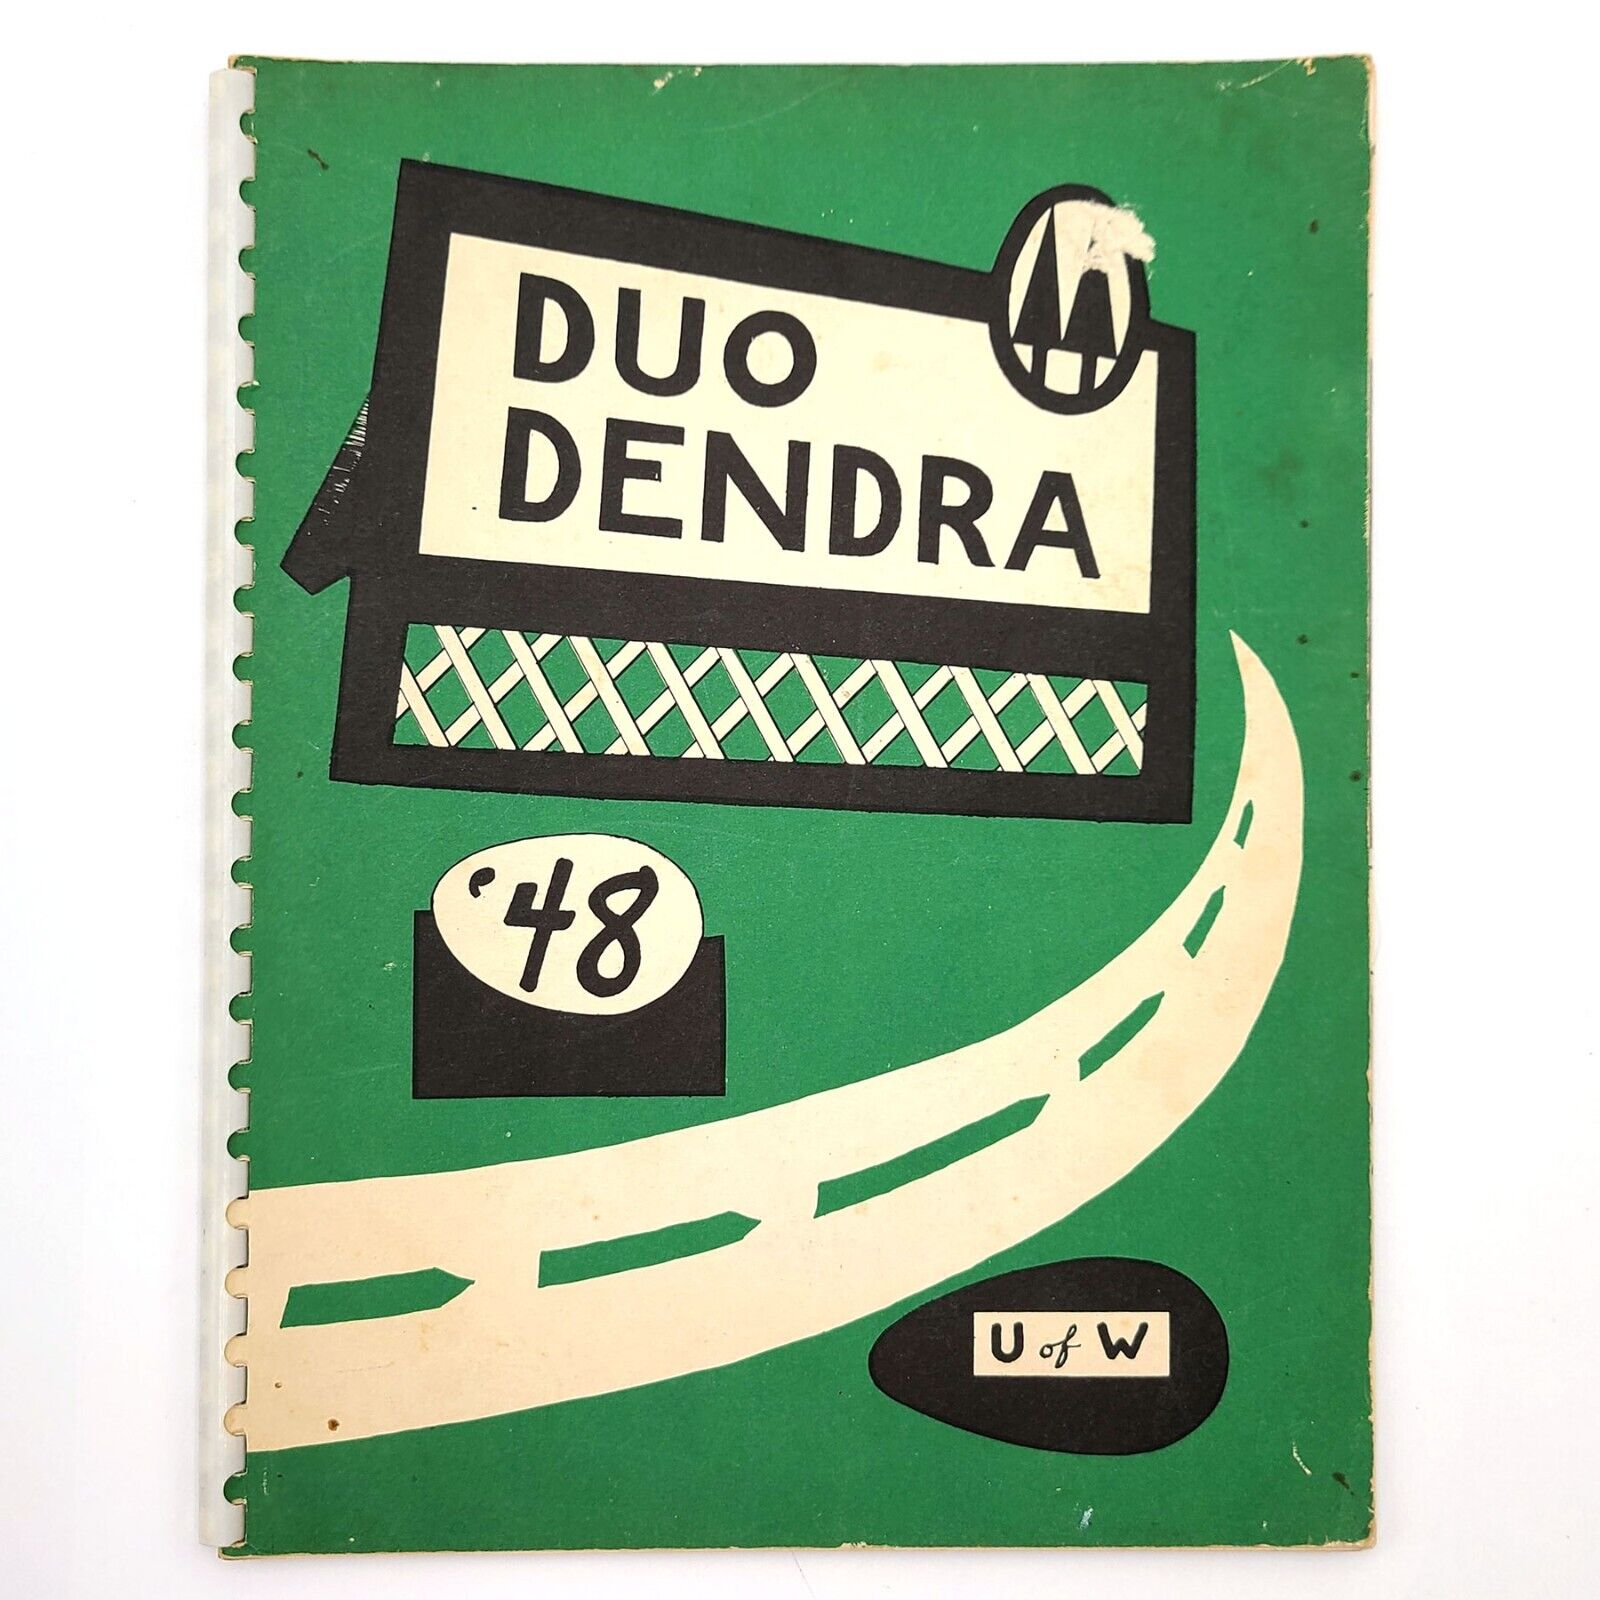 University of Washington 1948 Cooperative Housing Assoc Yearbook - Duo Dendra